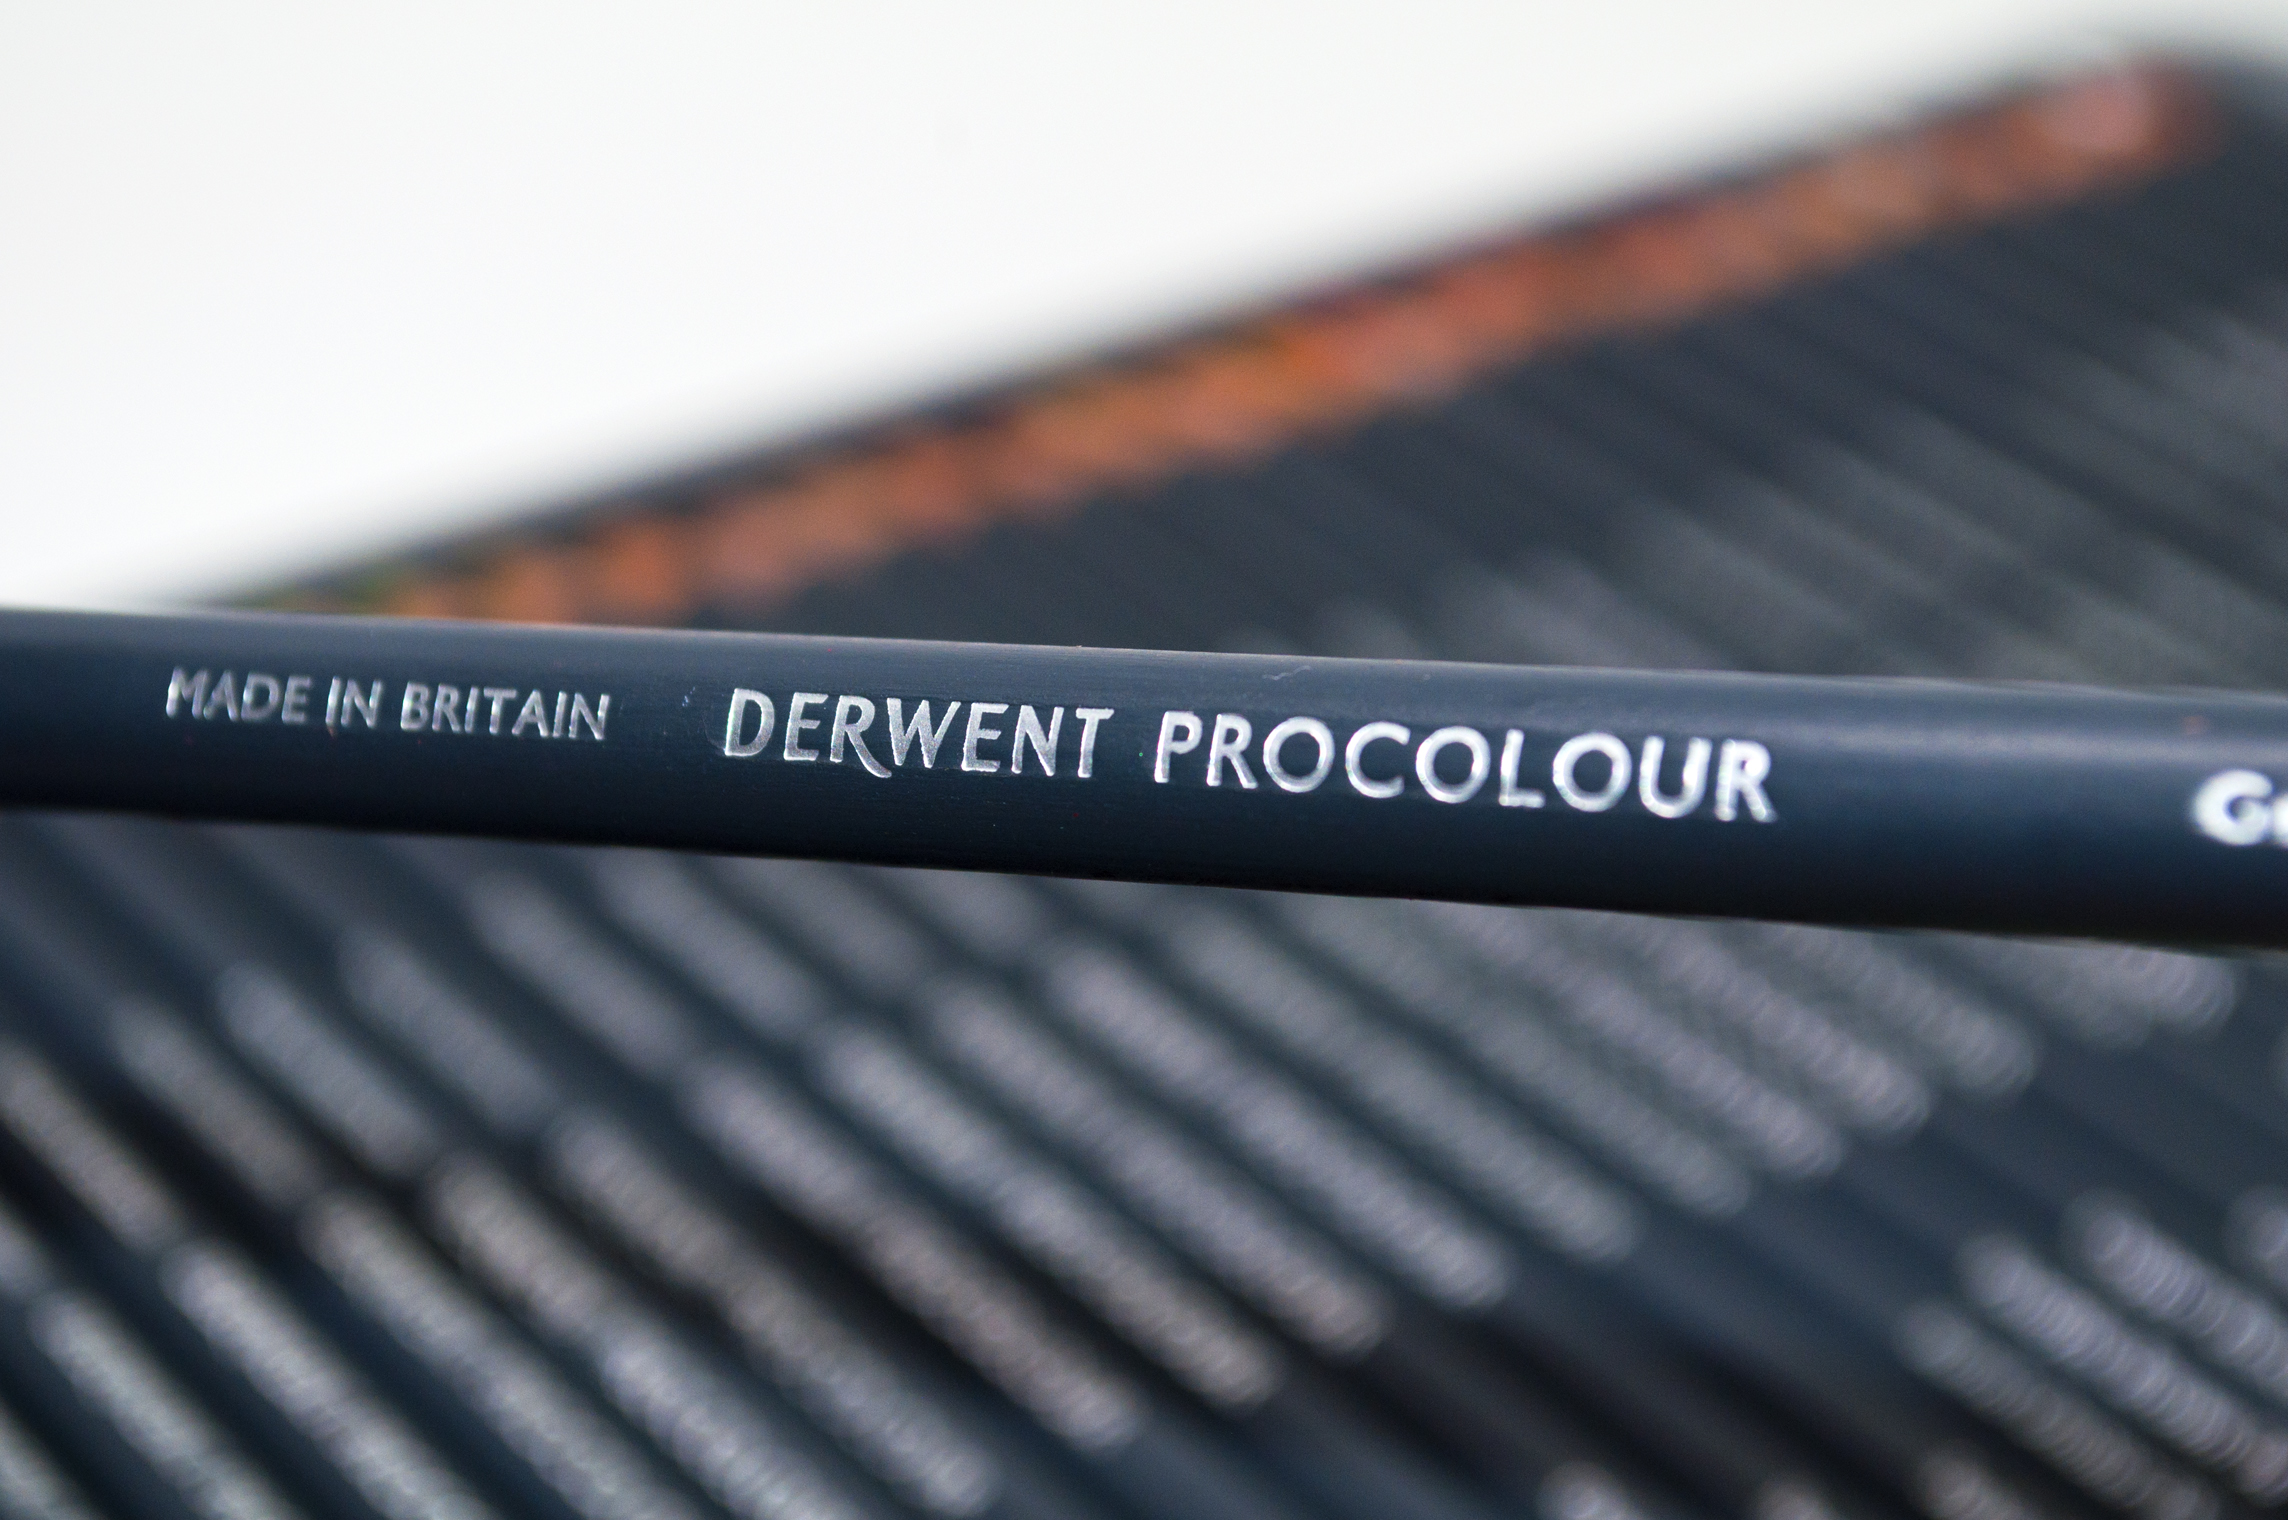 Derwent Studio Coloured Pencil Review — The Art Gear Guide